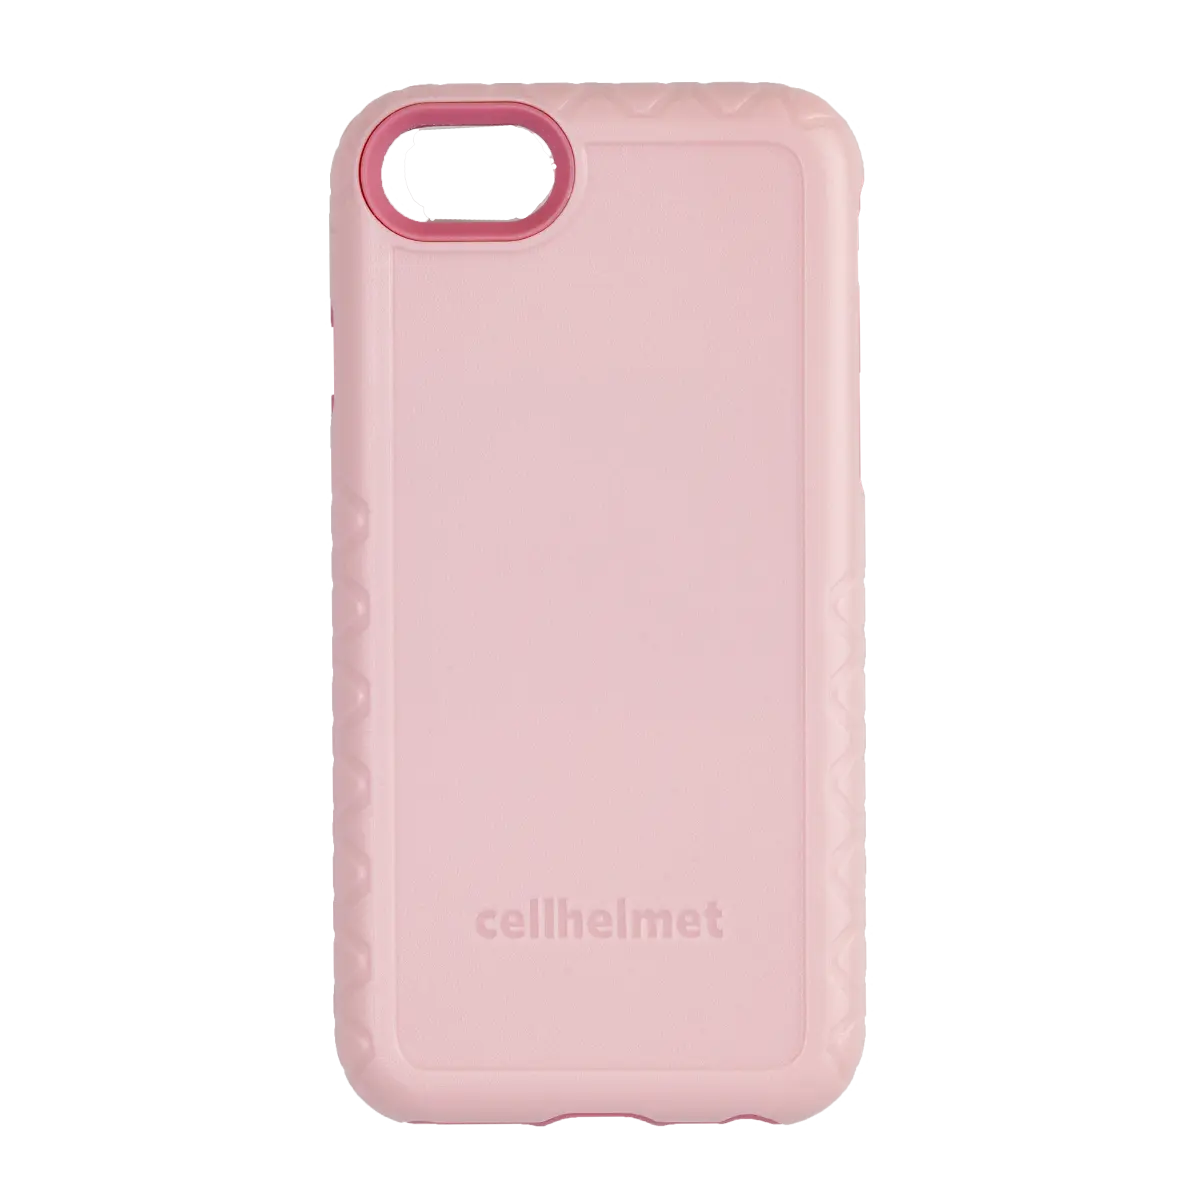 Pink cellhelmet Customizable Case for iPhone SE 2020